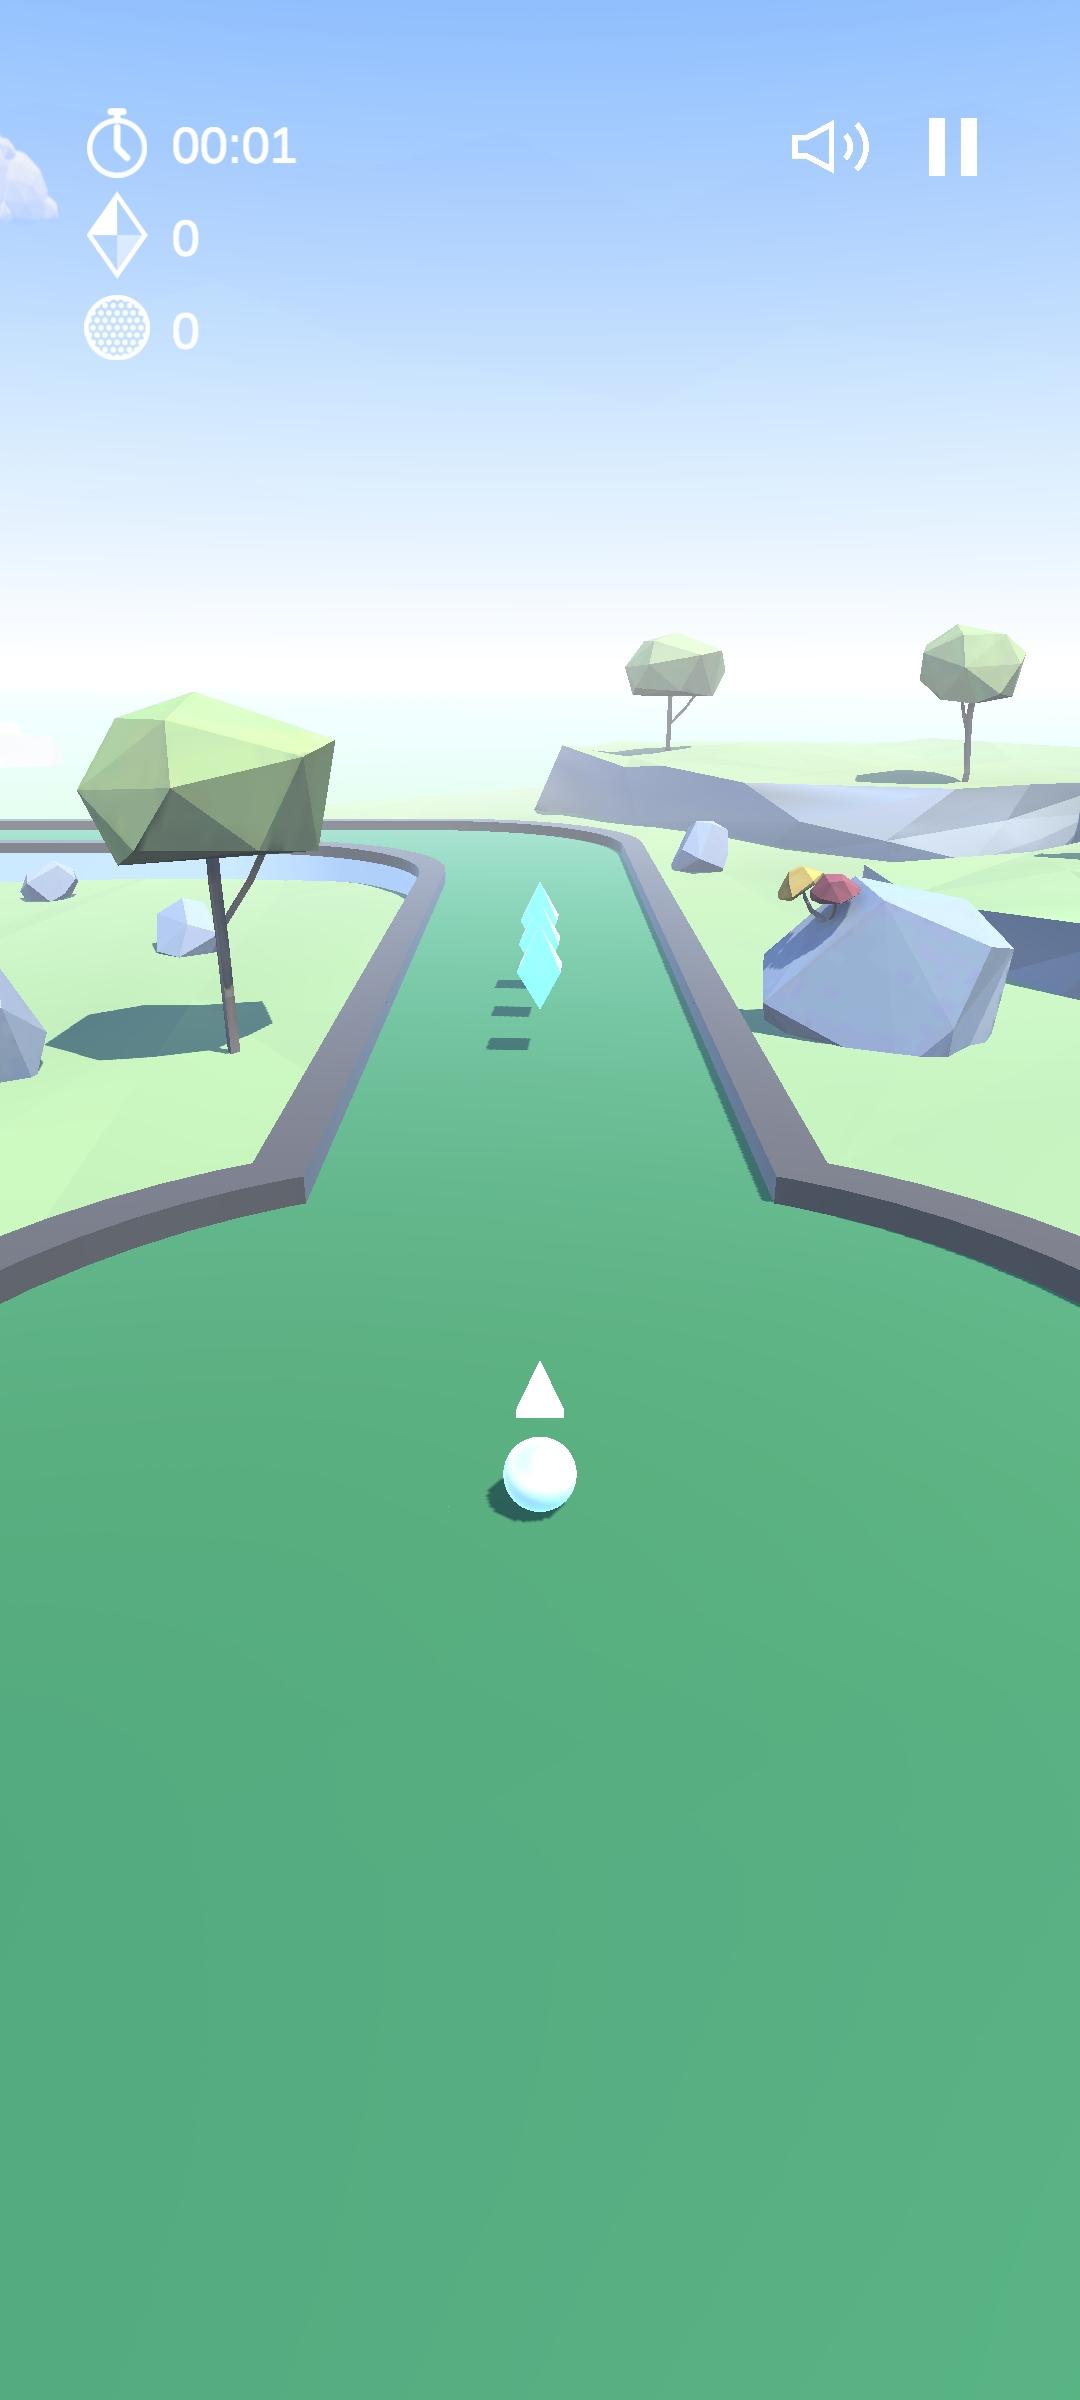 Mini Golf Adventure 2.11 Screenshot 13